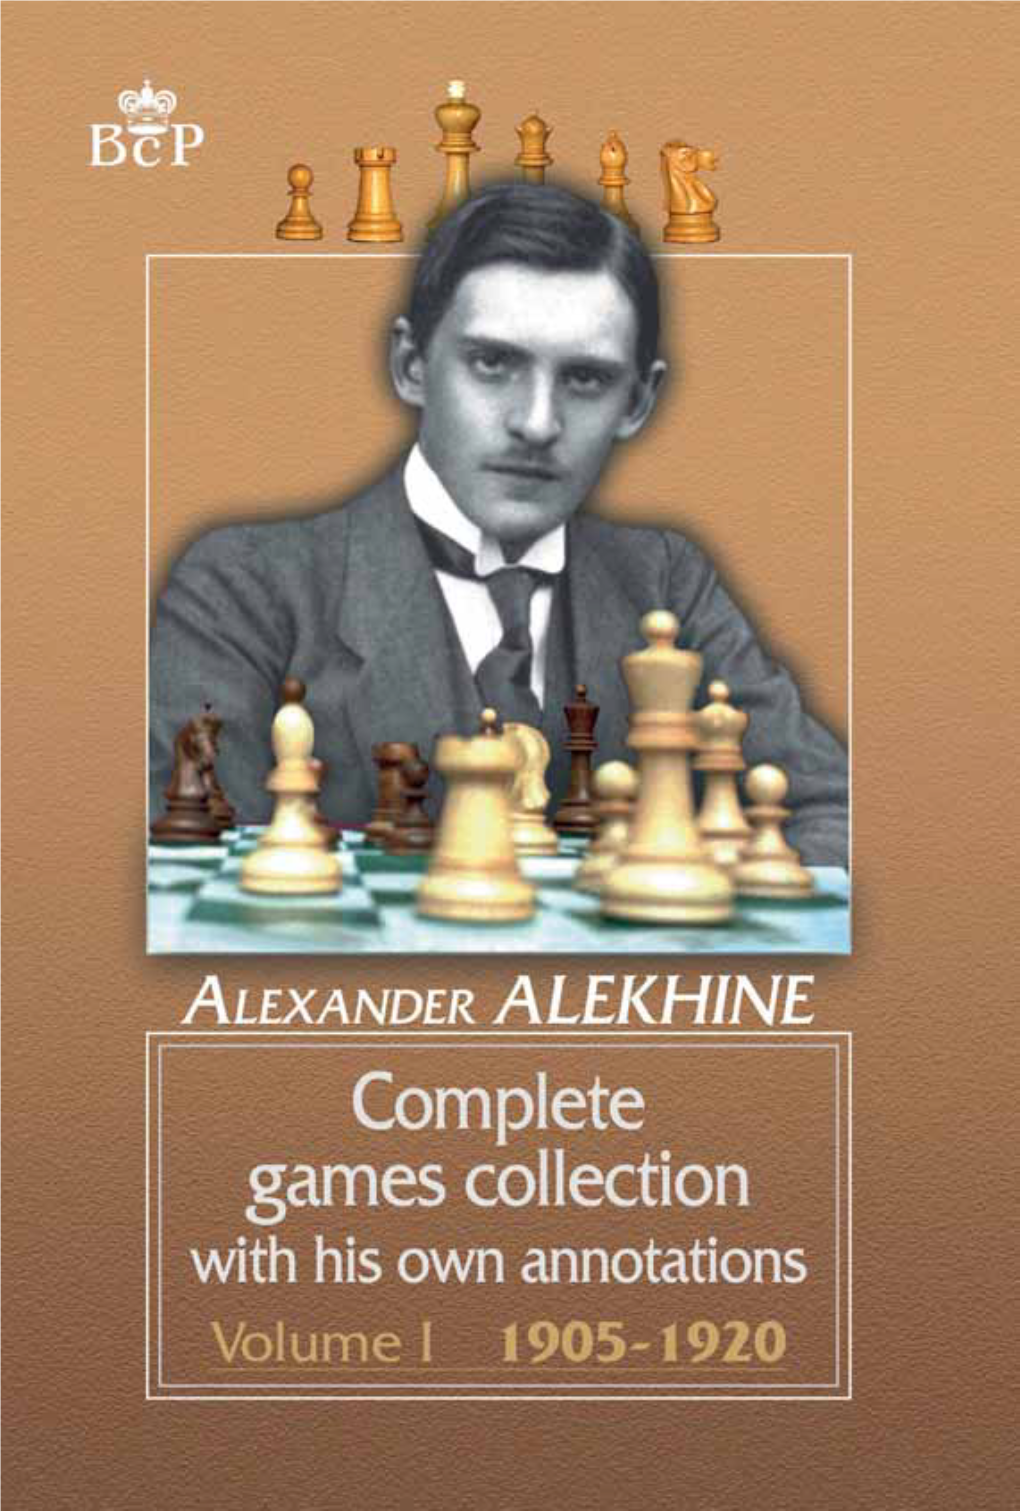 Alexander Alekhine -- the Complete Games Vol. I -- 60X90x16.Indd